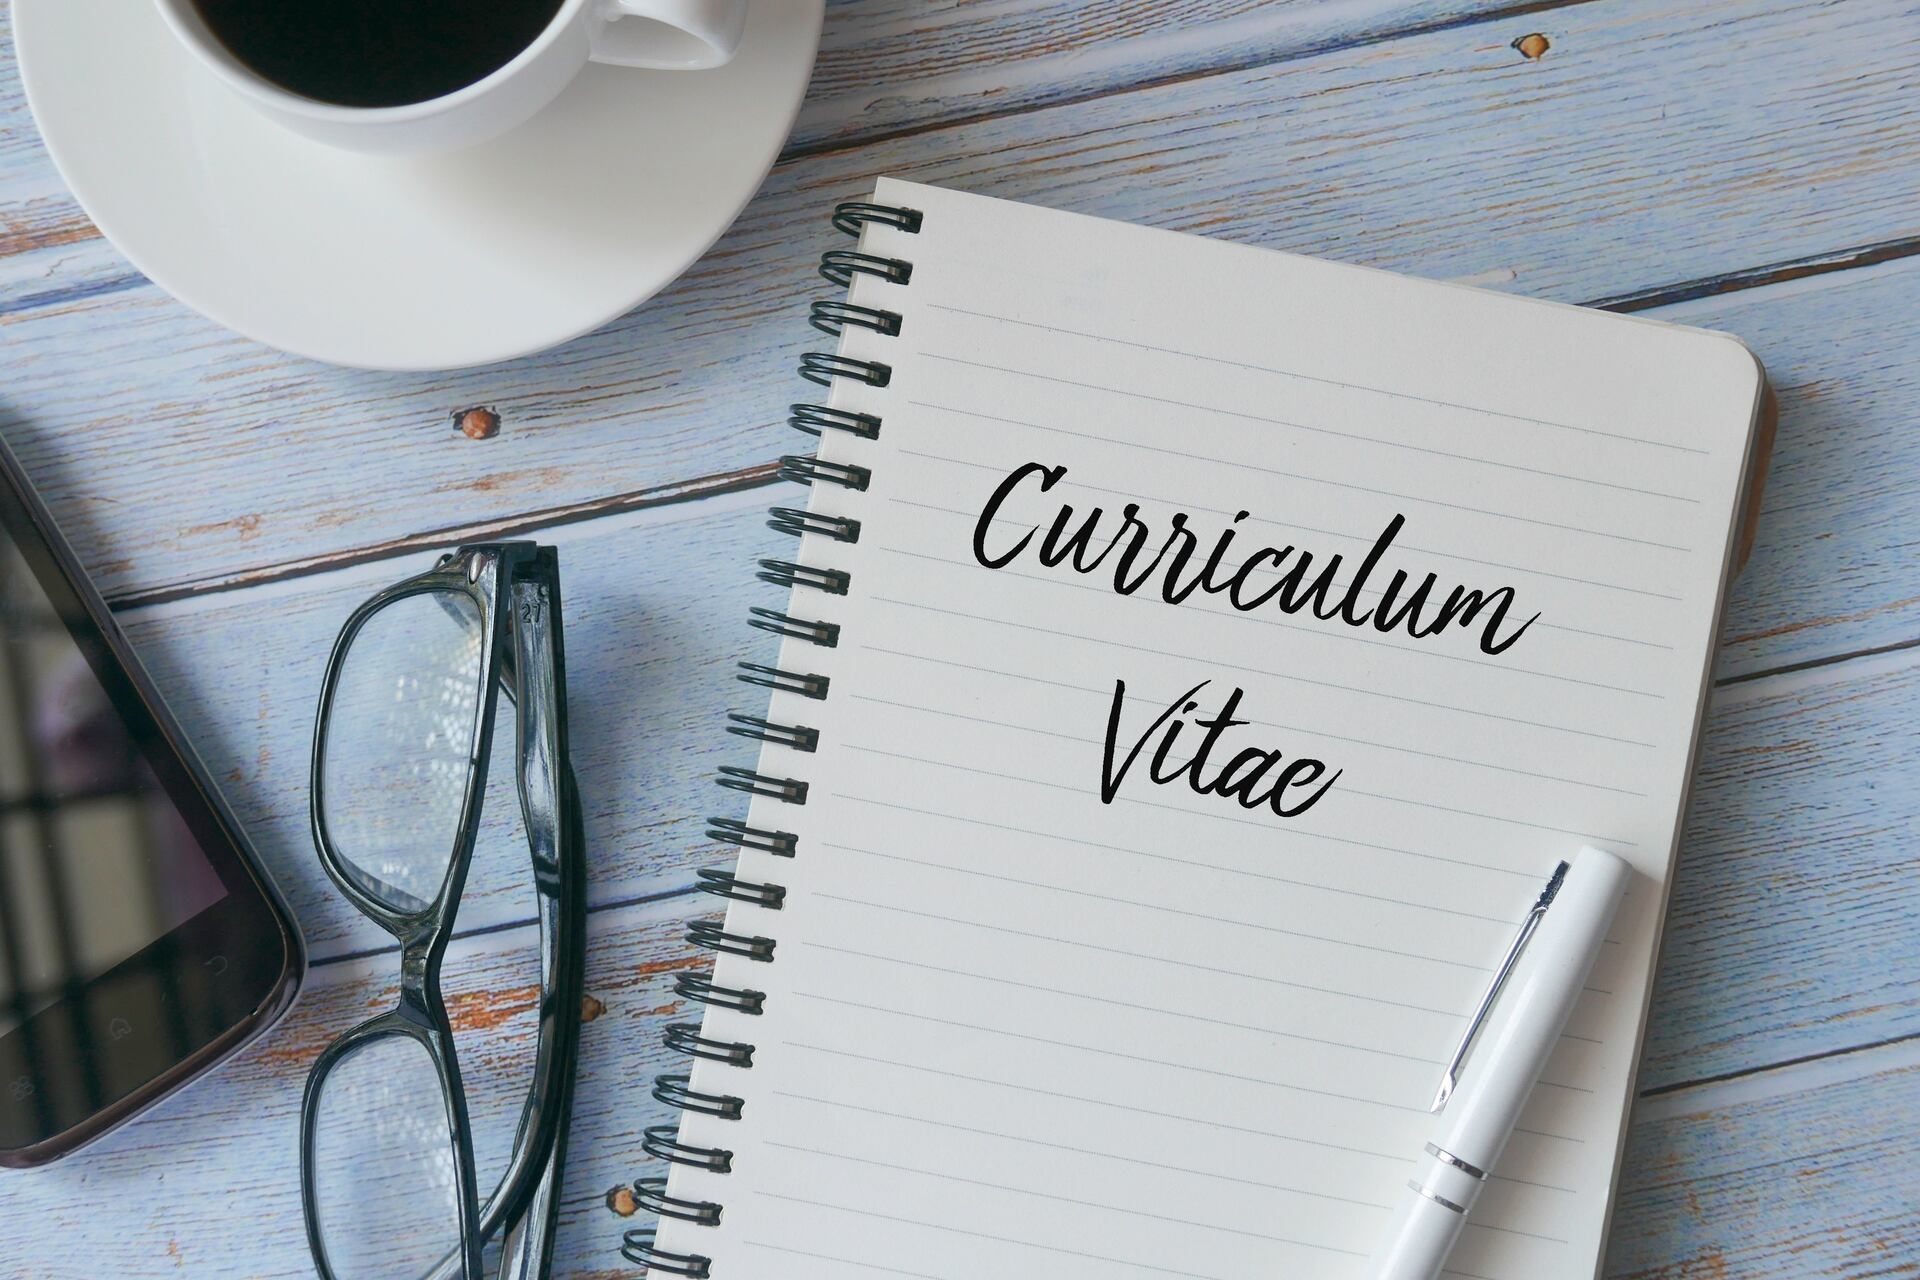 CV: elaborar un curriculum vitae o profesional o redactar una carta de motivación o presentación capaz de marcar la diferencia no es fácil